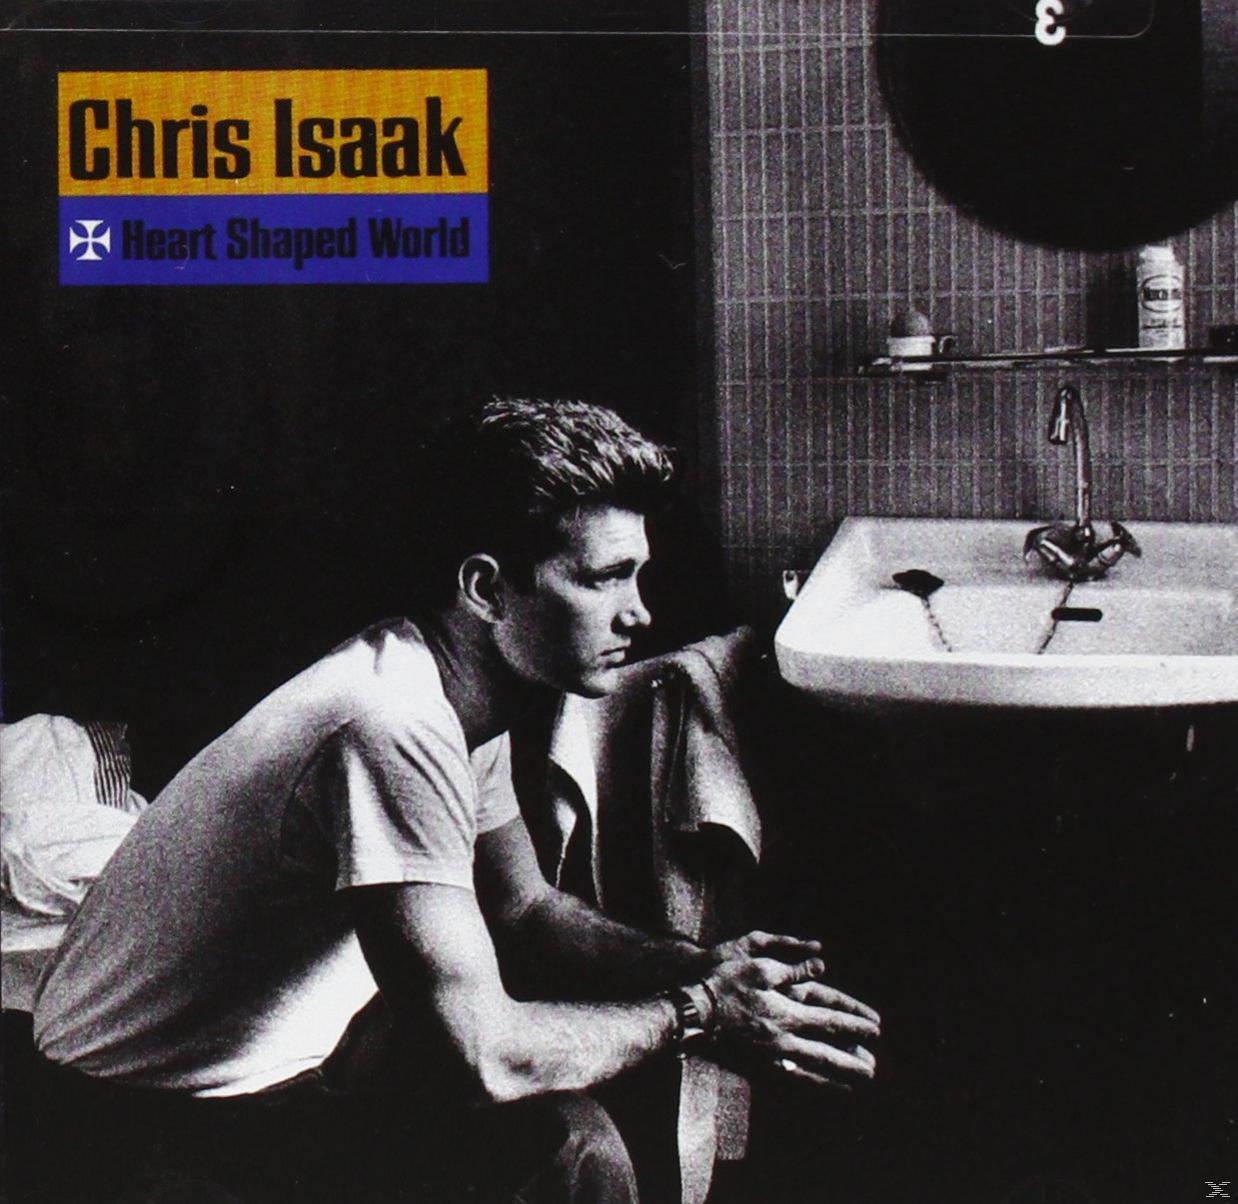 Chris World Shaped - - Heart (CD) Isaak